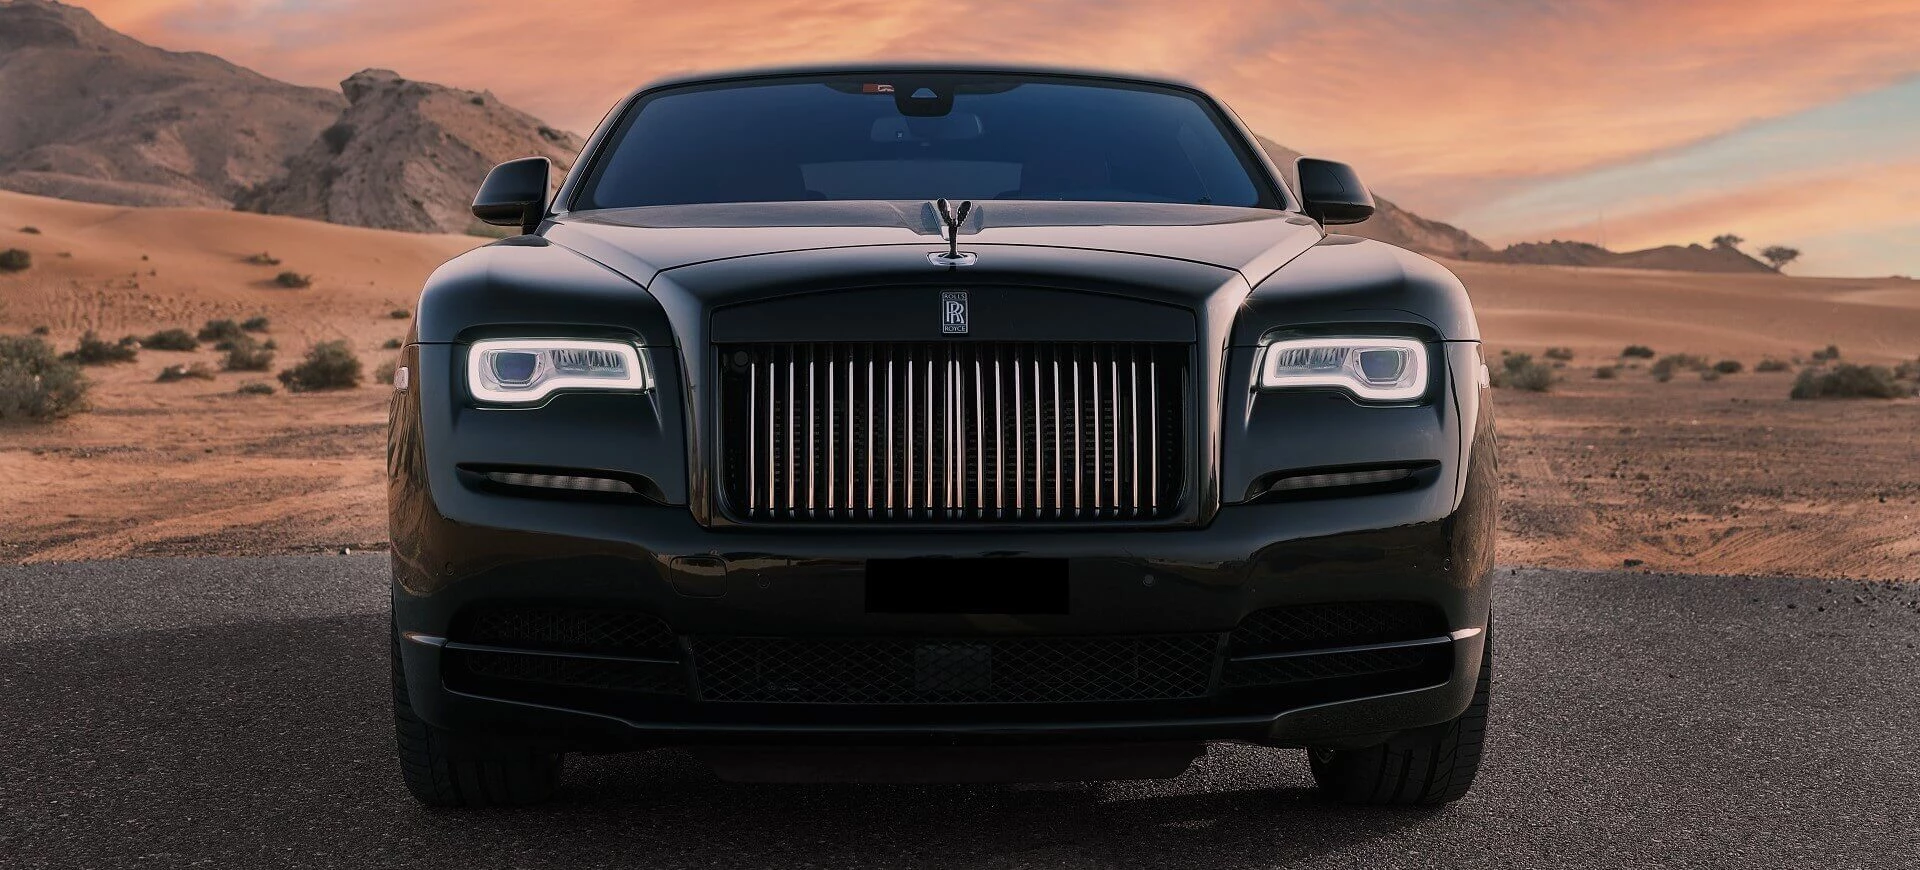 Lej Rolls Royce Wraith i Dubai